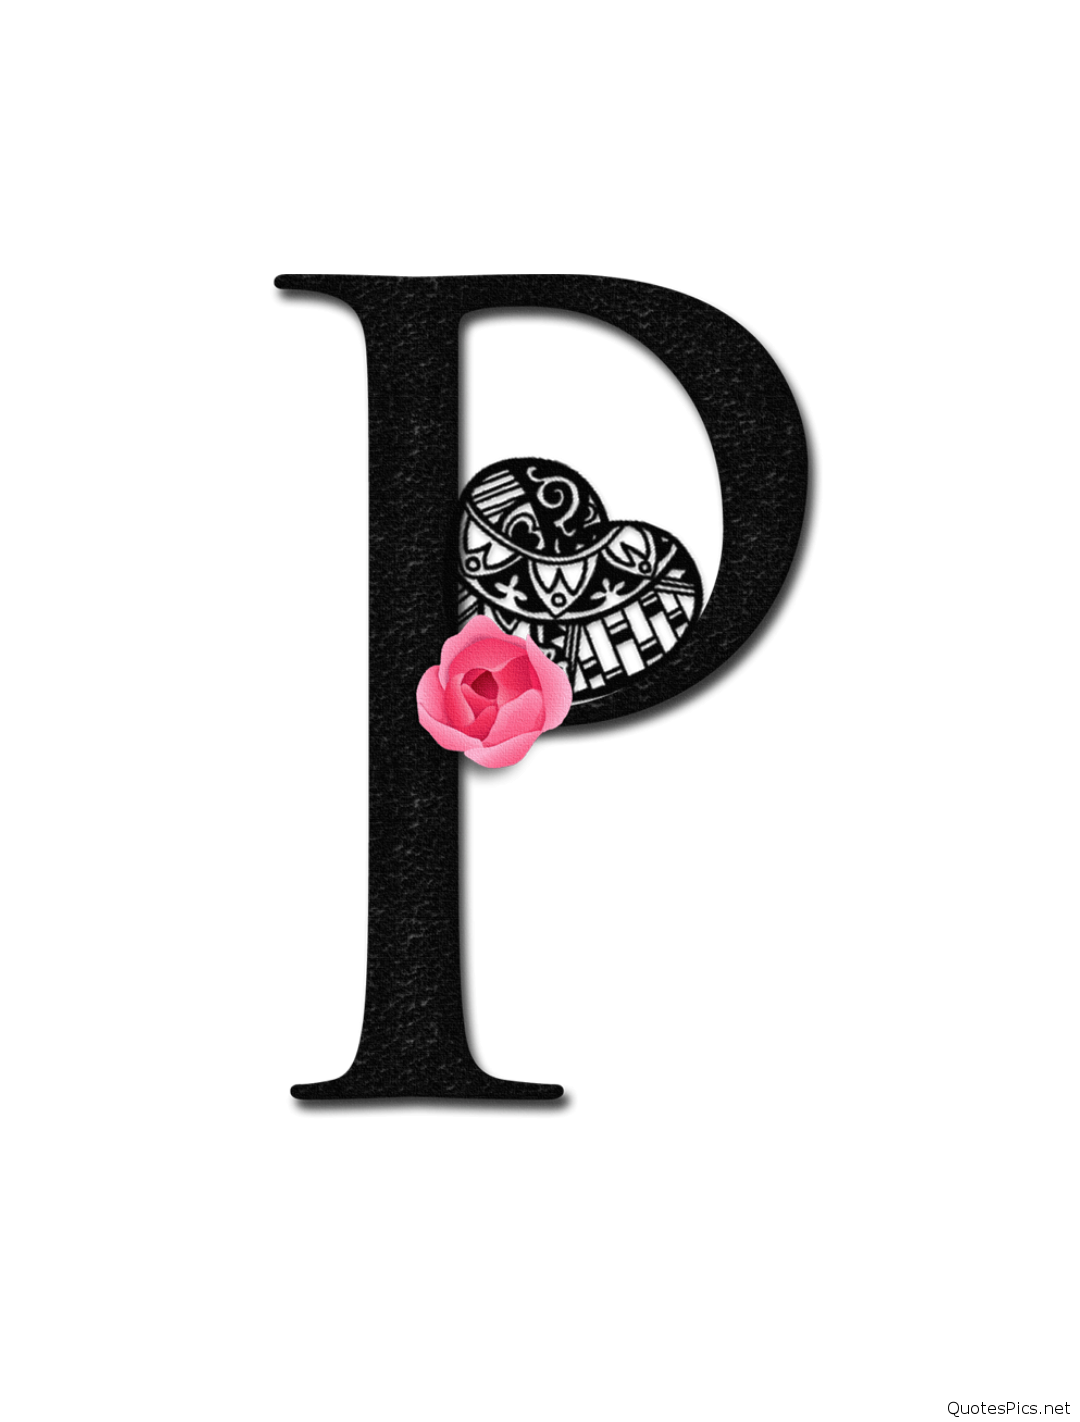 Letter p printable. P letter design, Lettering design, Typography inspiration